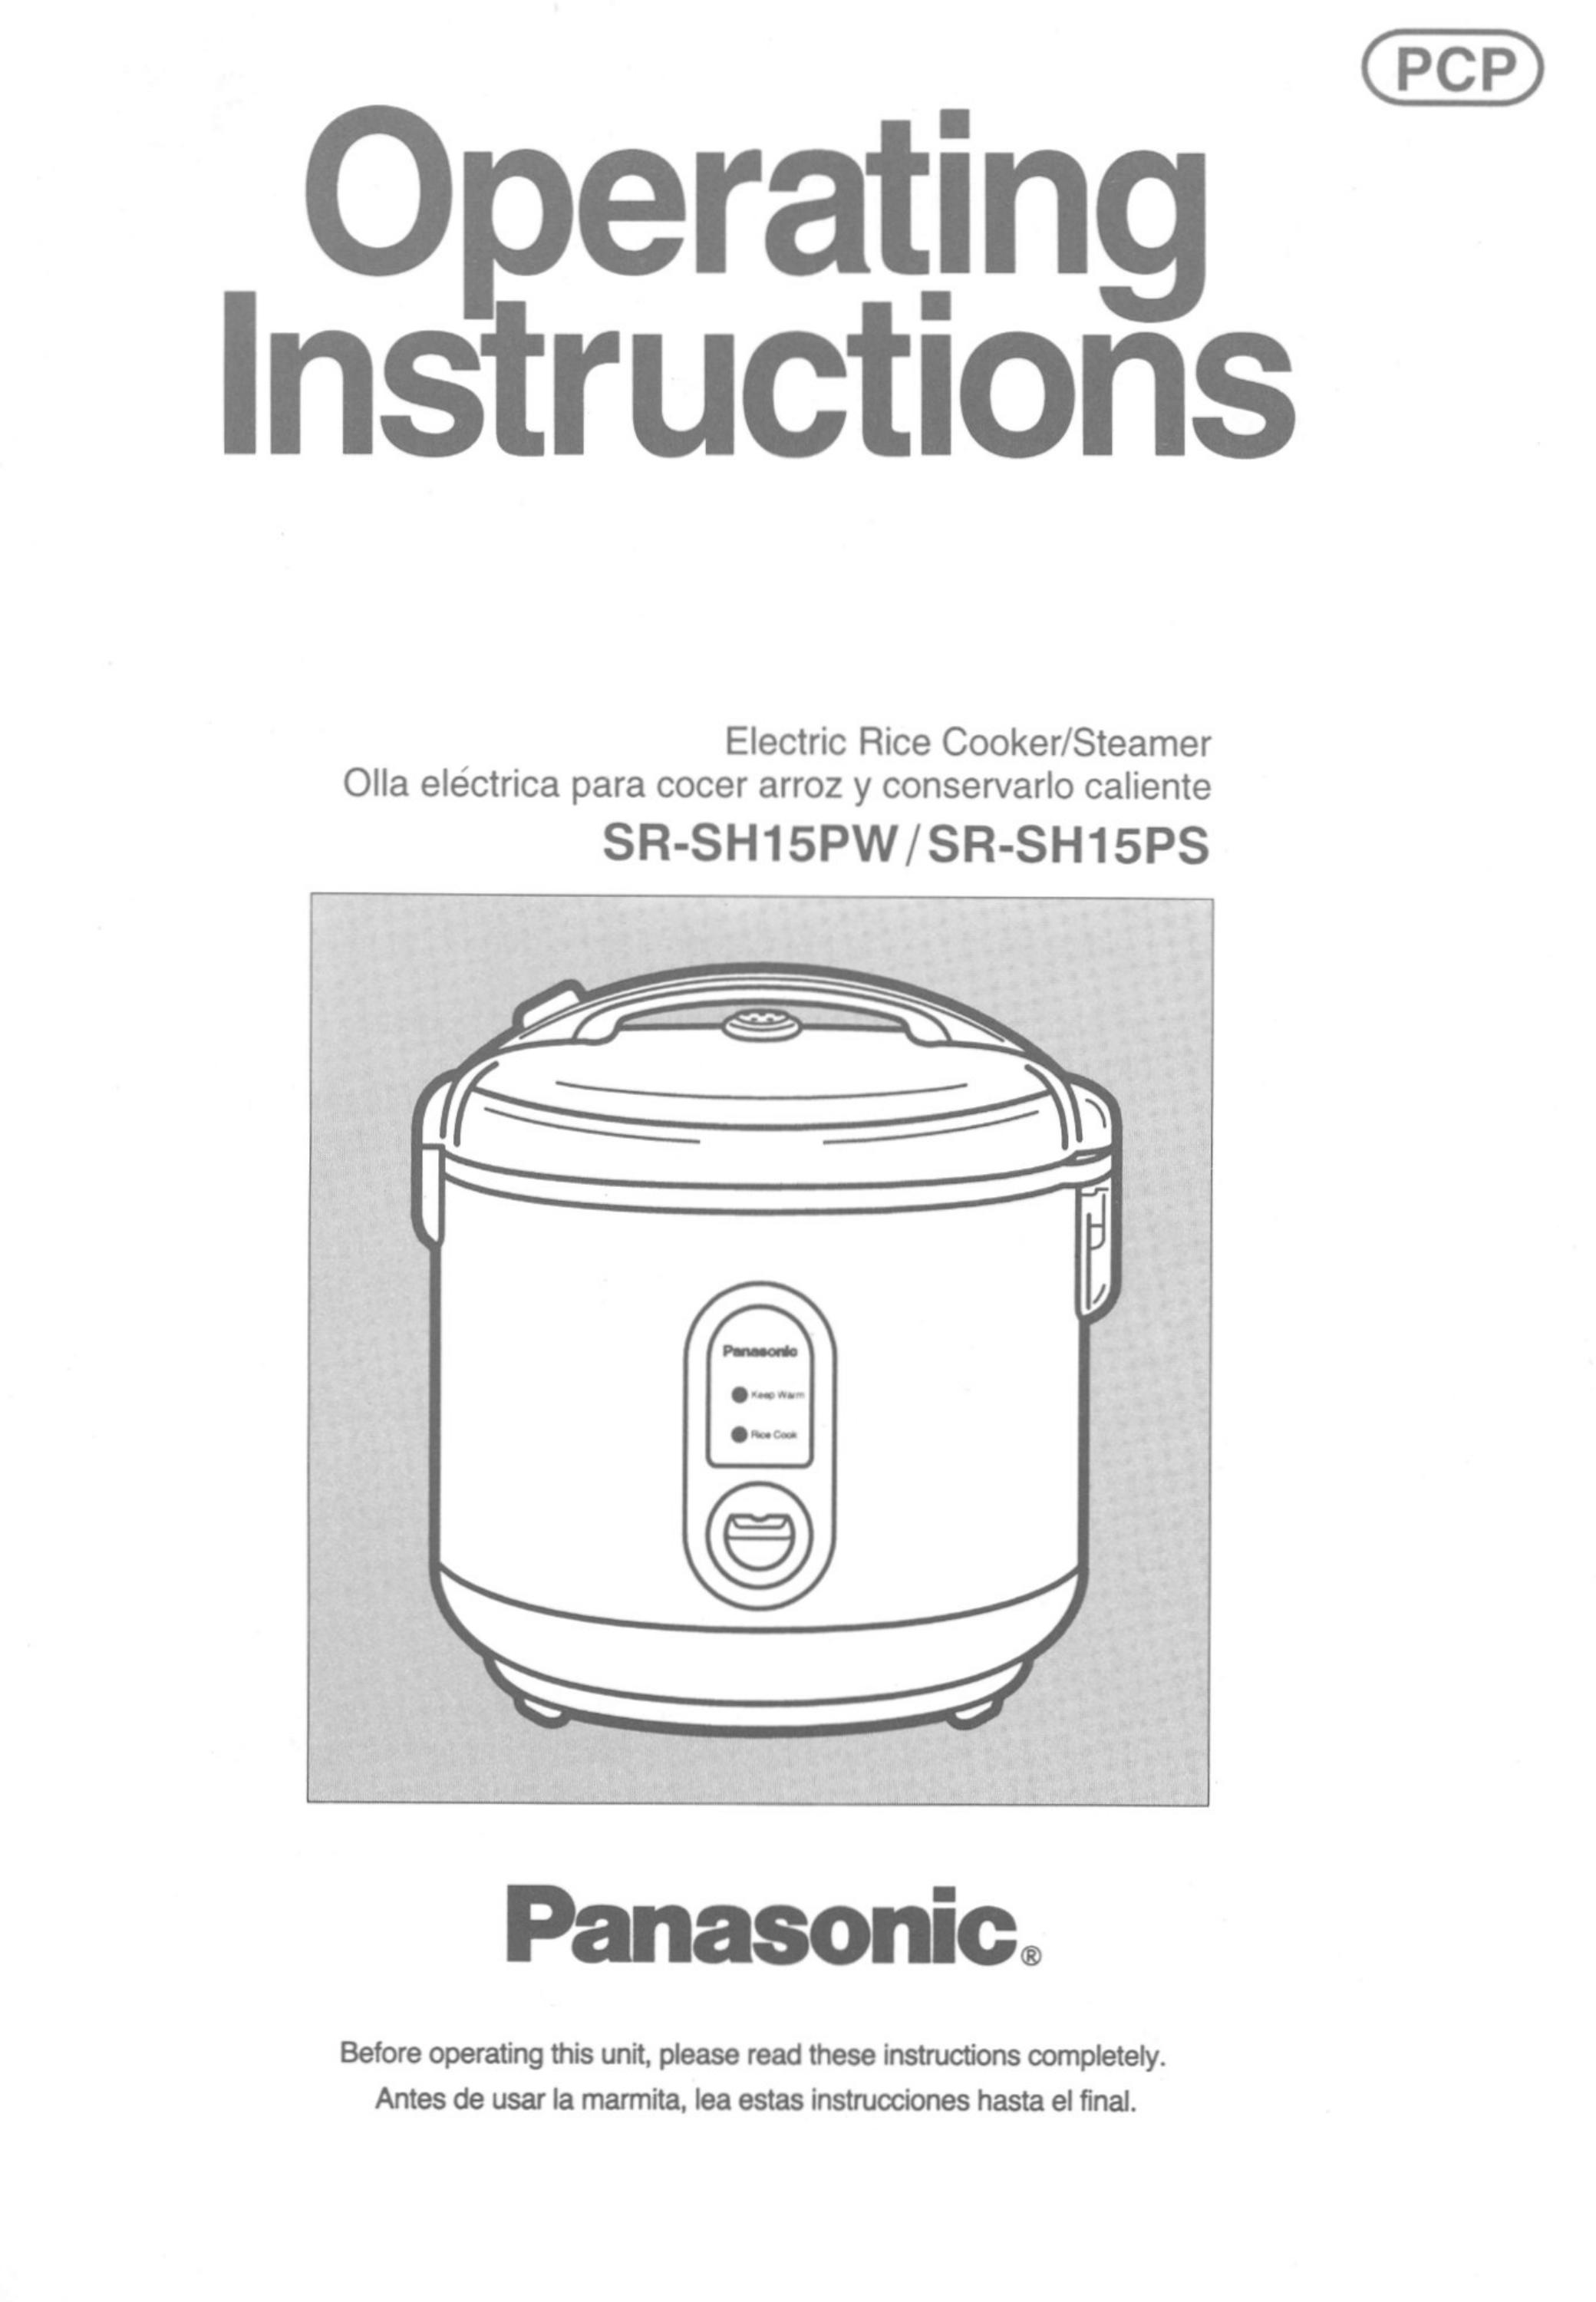 Panasonic SR-SH15PW Rice Cooker User Manual